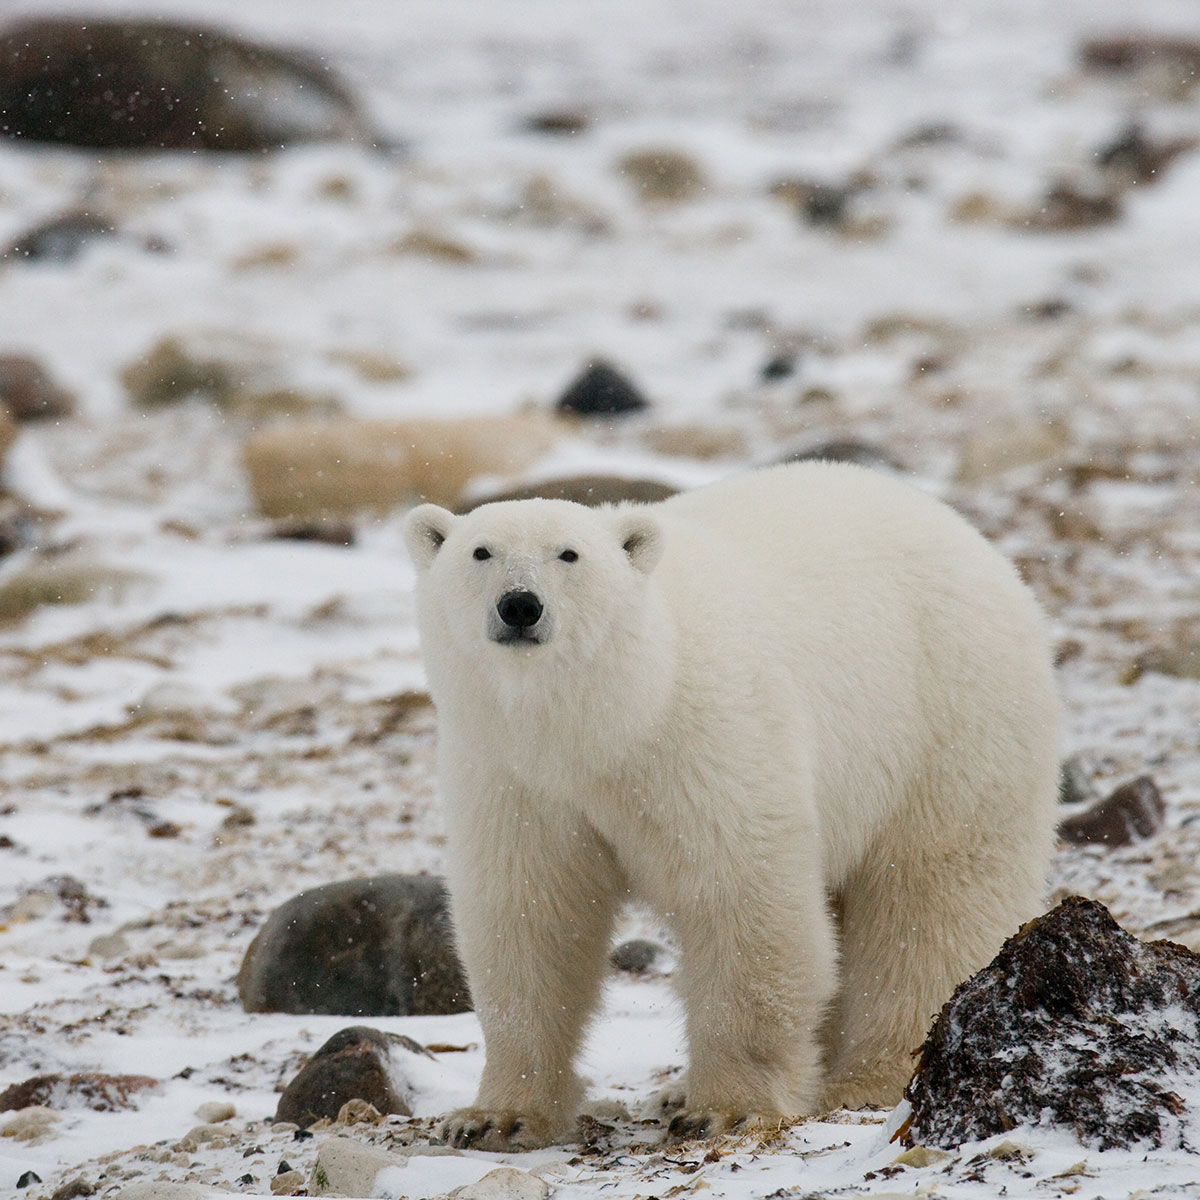 International Polar Bear Day 